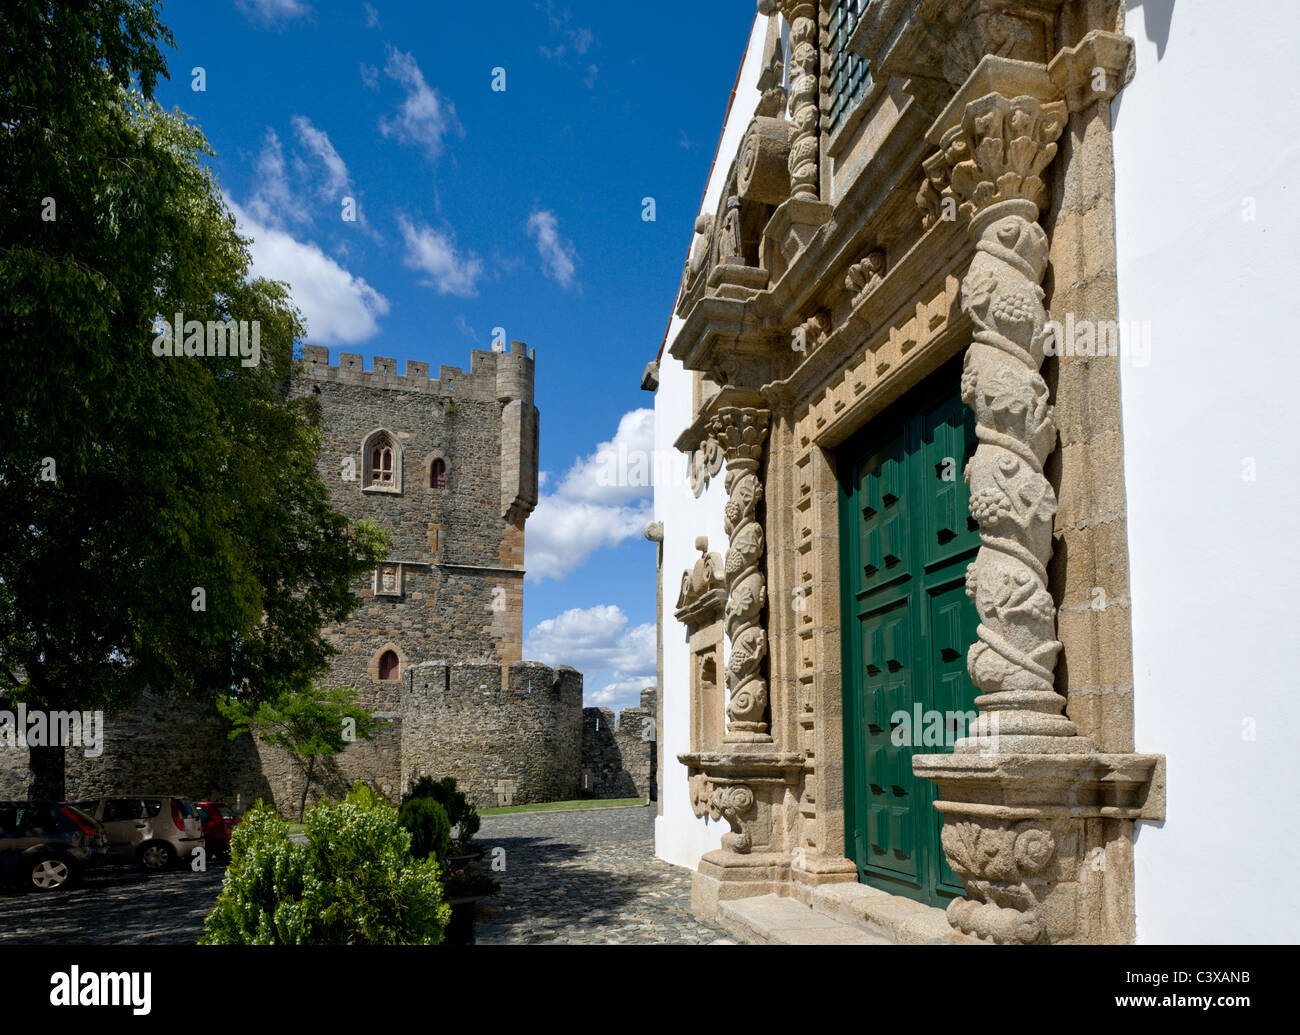 Portugal, Braganca, baroque doorway of the igreja da Santa Maria church, with the castle in the background Stock Photo